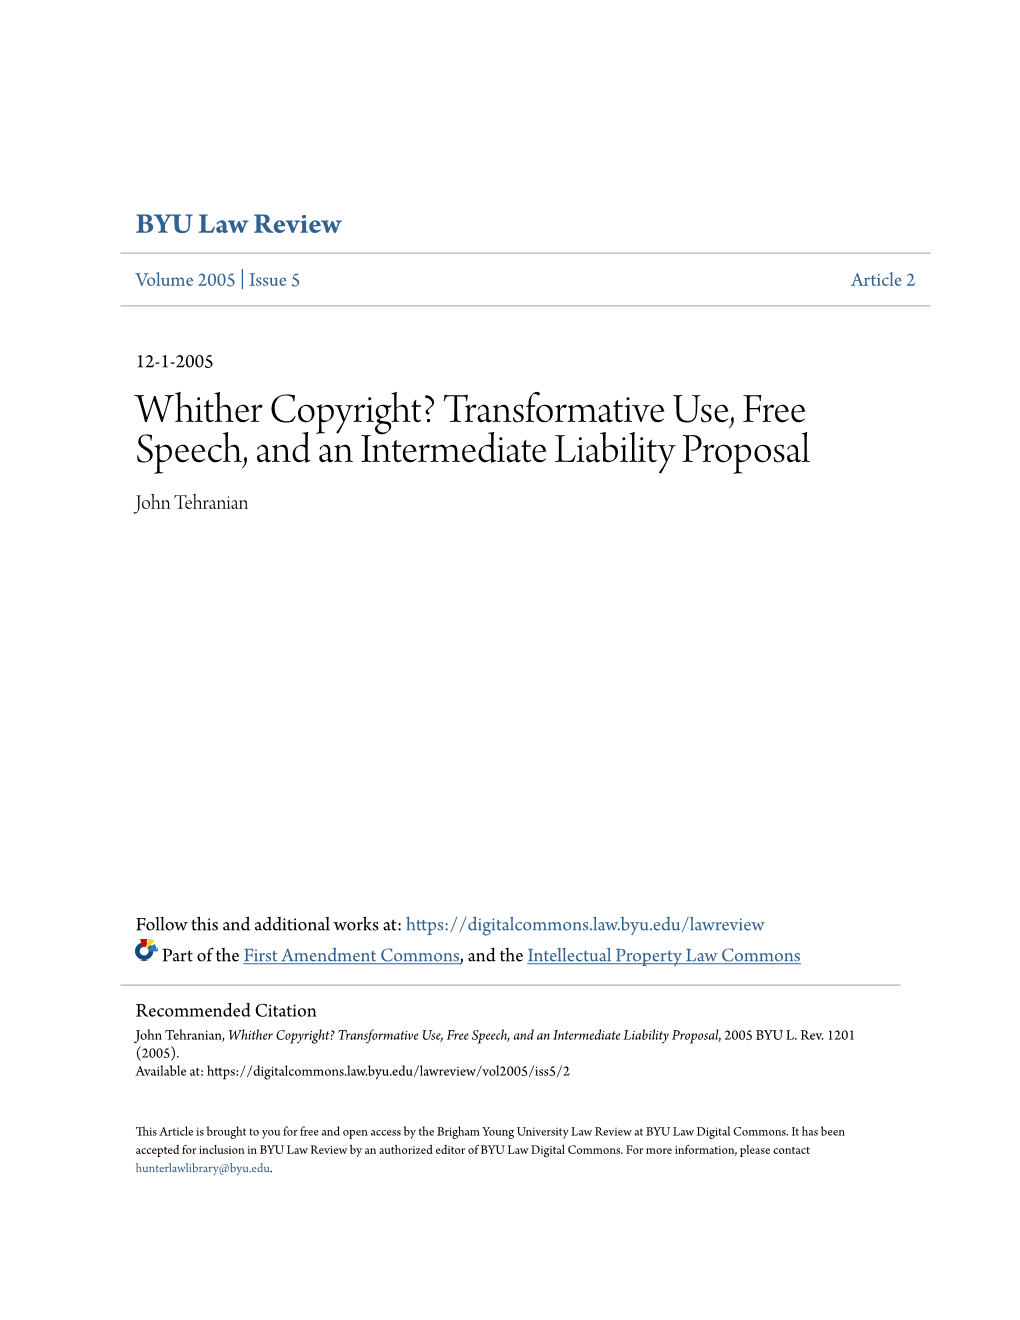 Transformative Use, Free Speech, and an Intermediate Liability Proposal John Tehranian